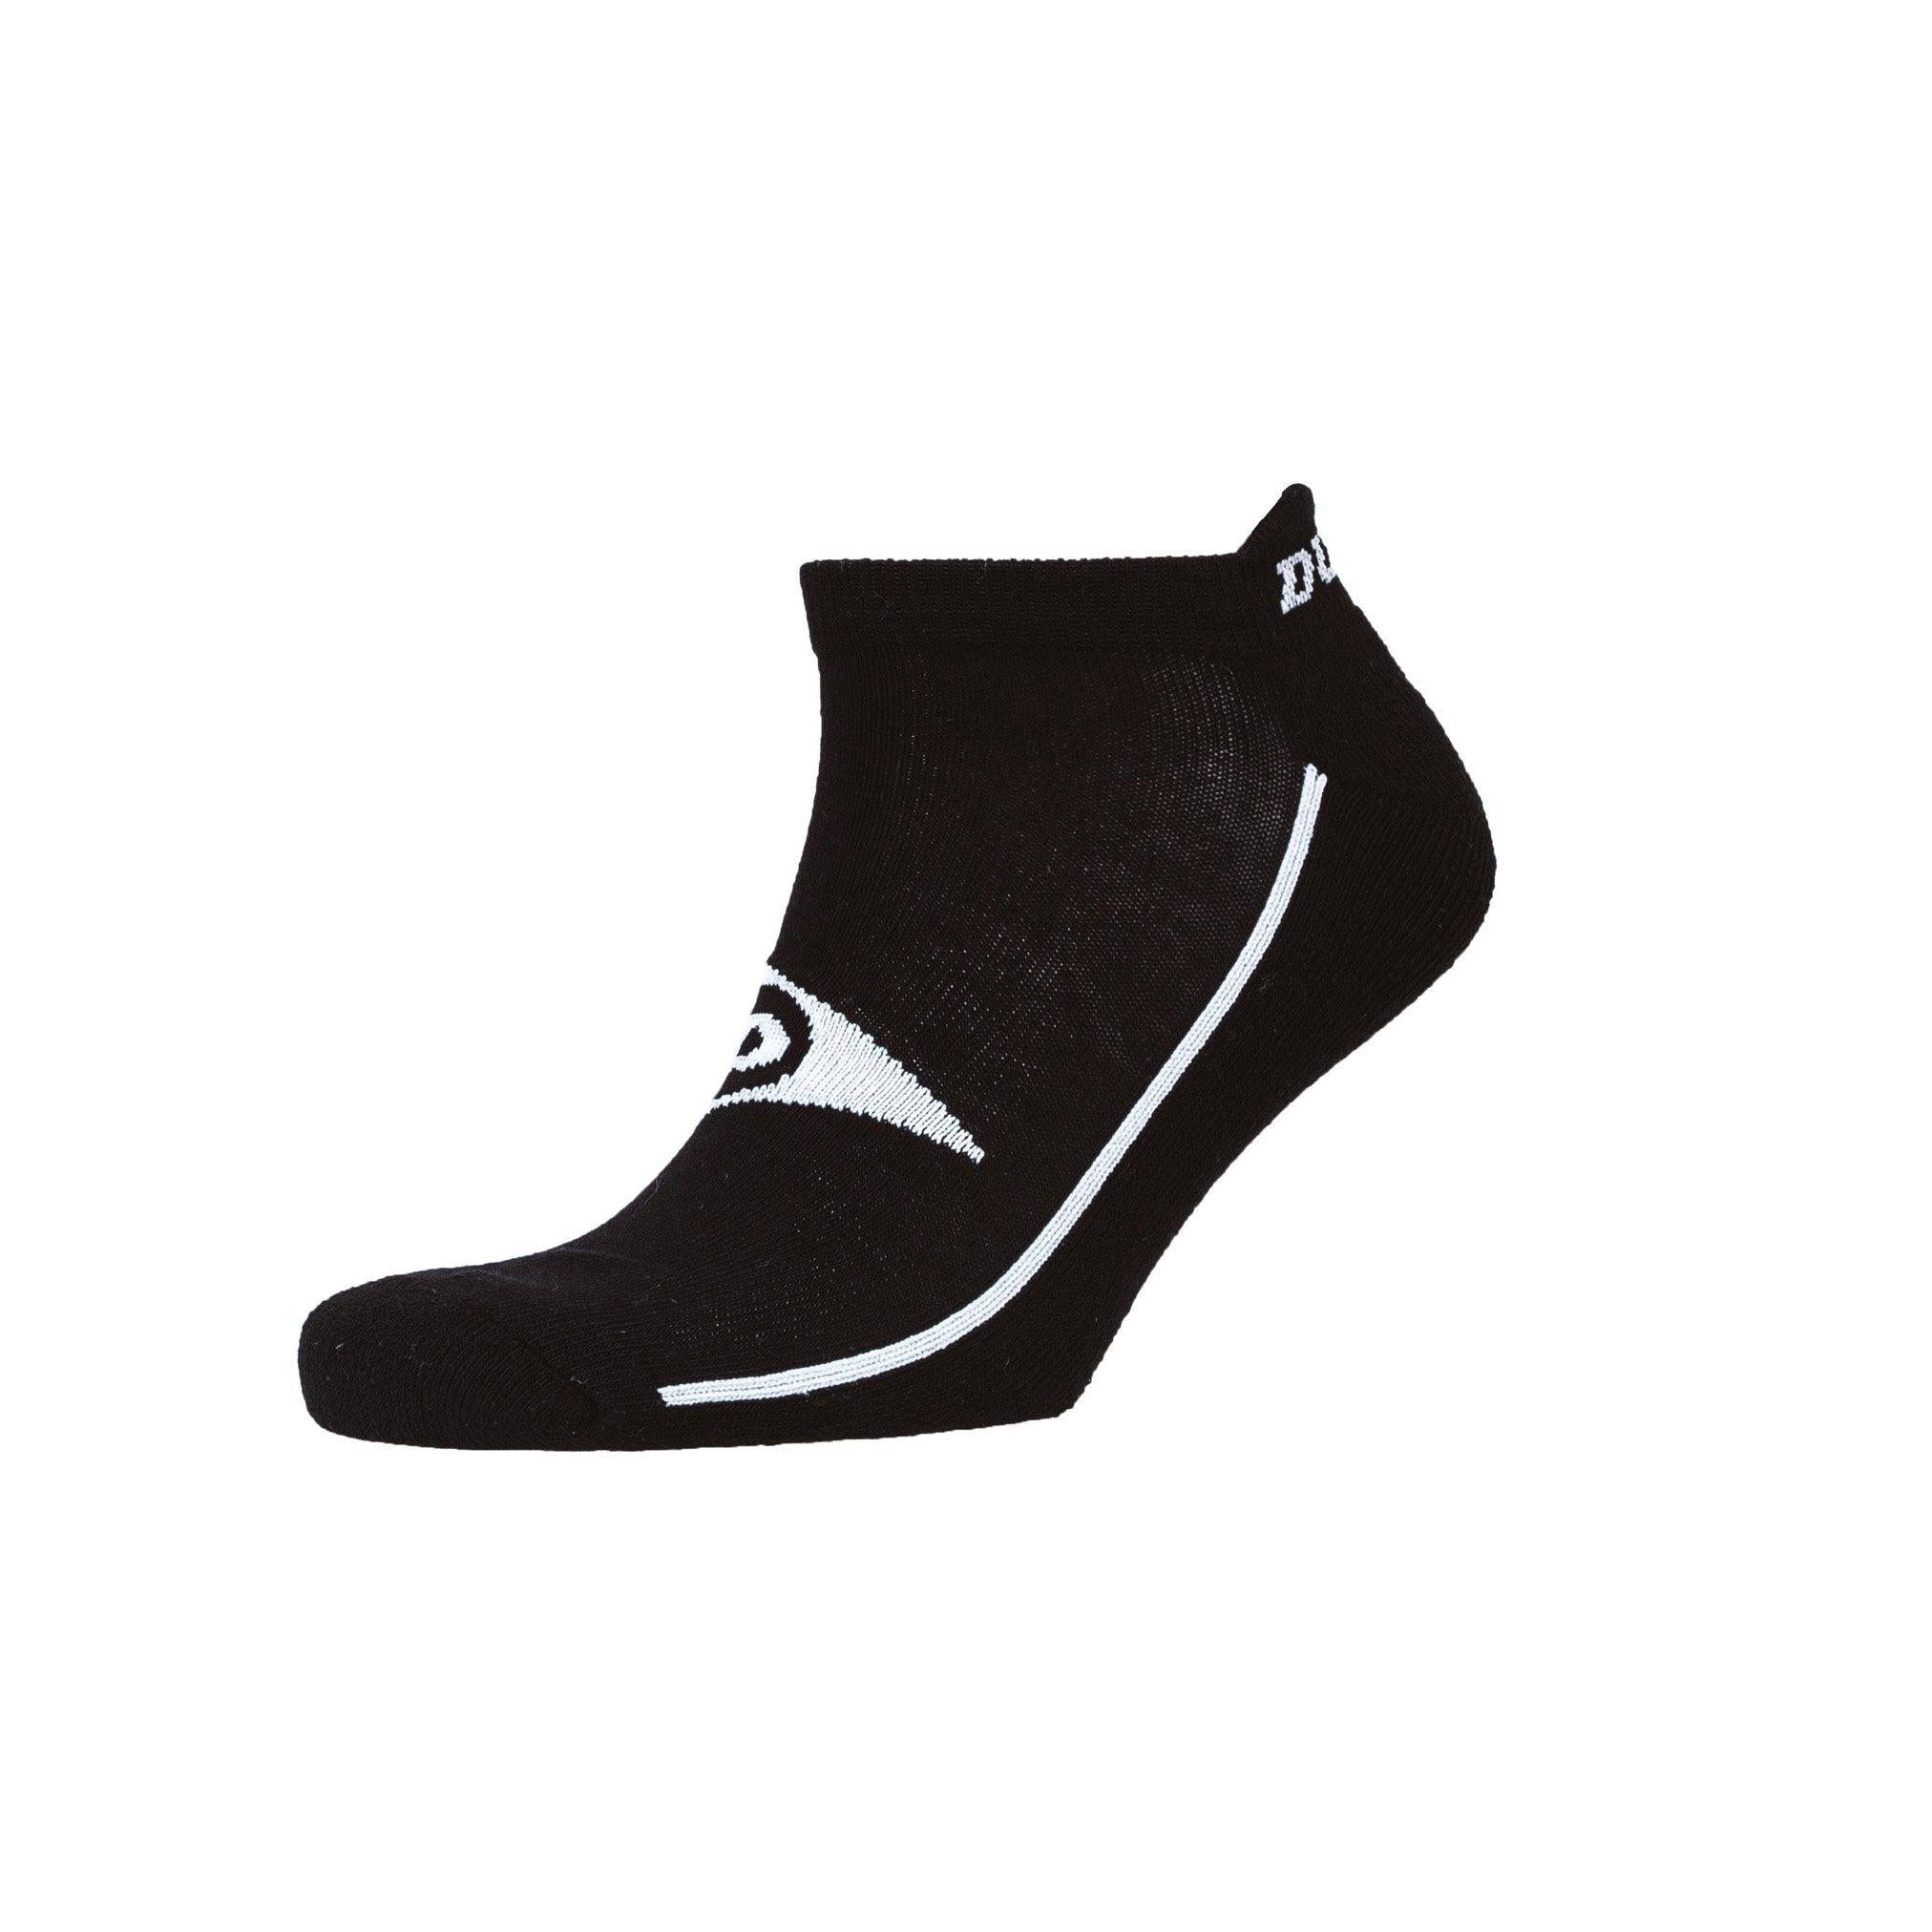 Leighwood Trainer Socks 3Pk - Black/white/grey Accessories